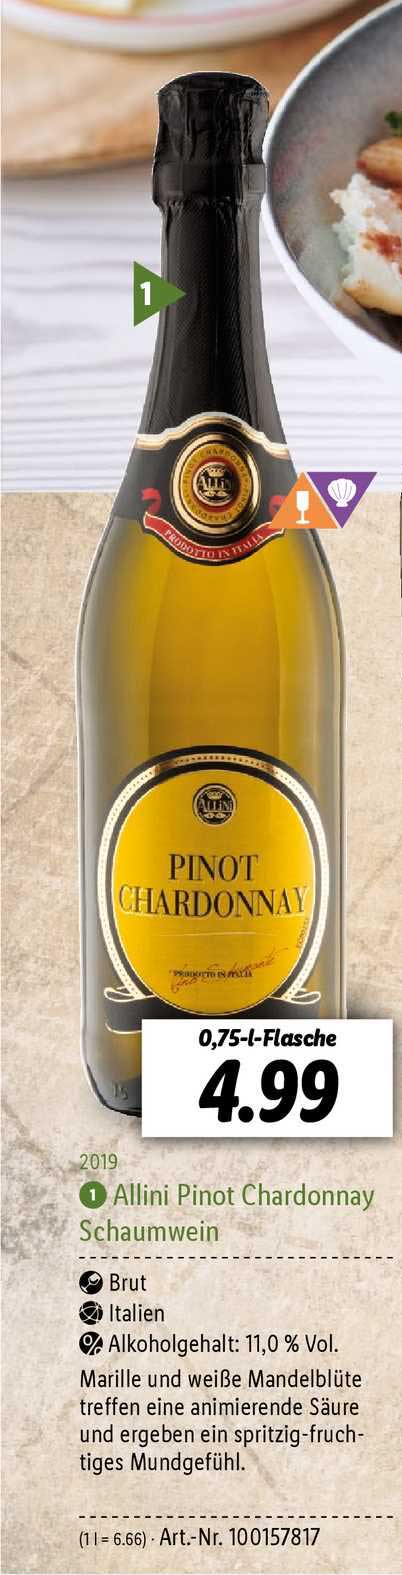 Allini Pinot Chardonnay Schaumwein Angebot bei Lidl